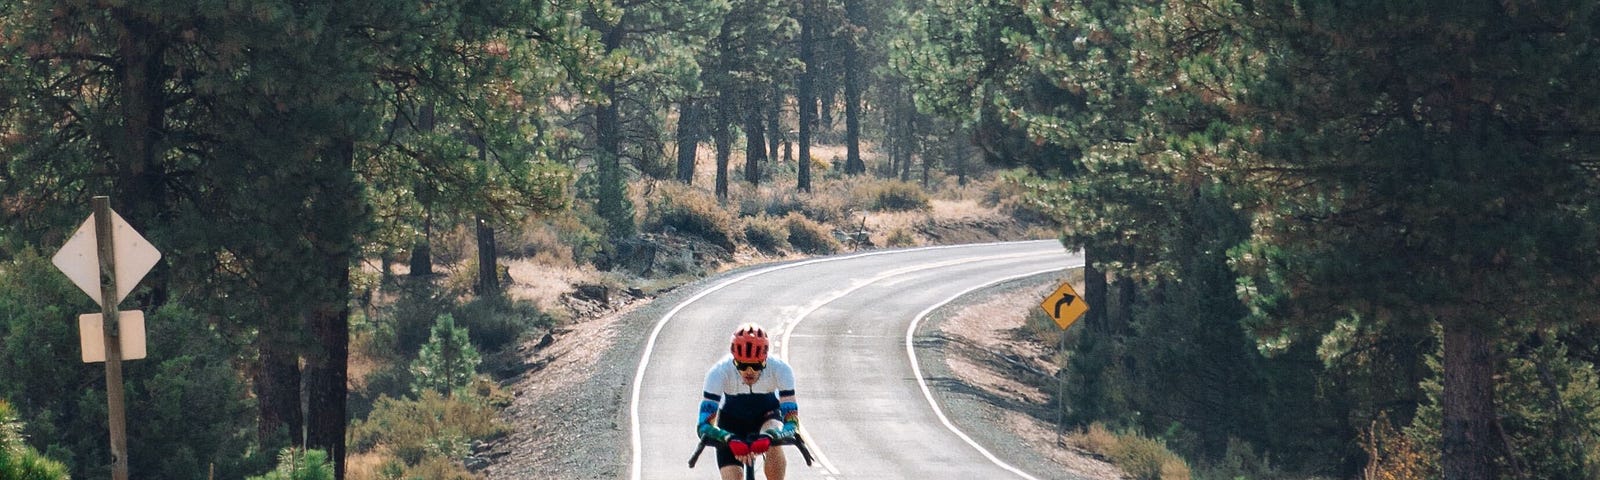 Aero tuck bike riding on the highway